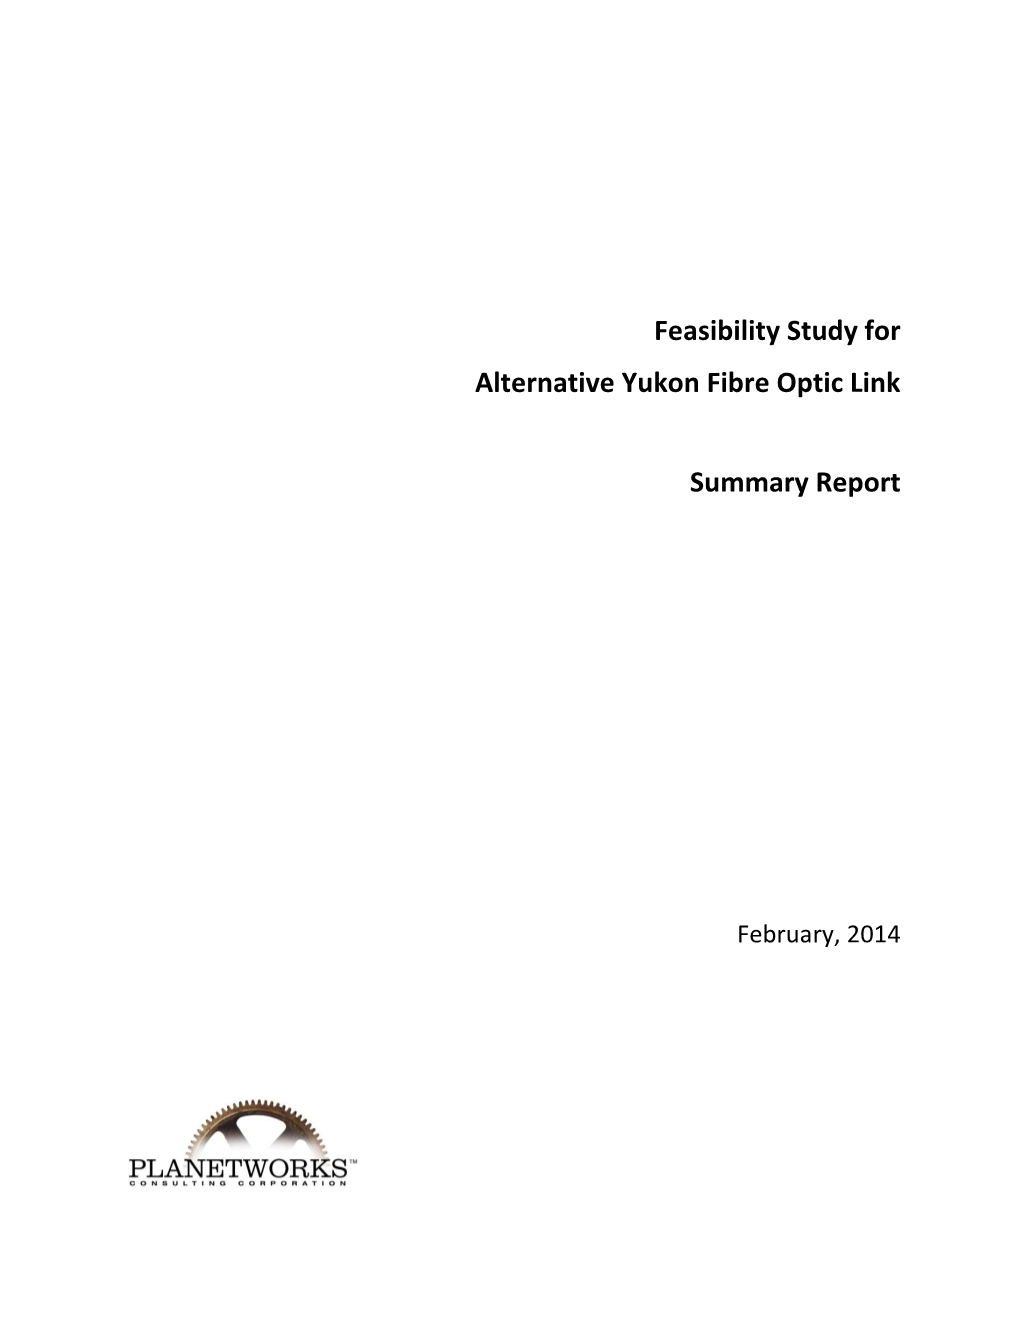 Feasibility Study for Alternative Yukon Fibre Optic Link Summary Report